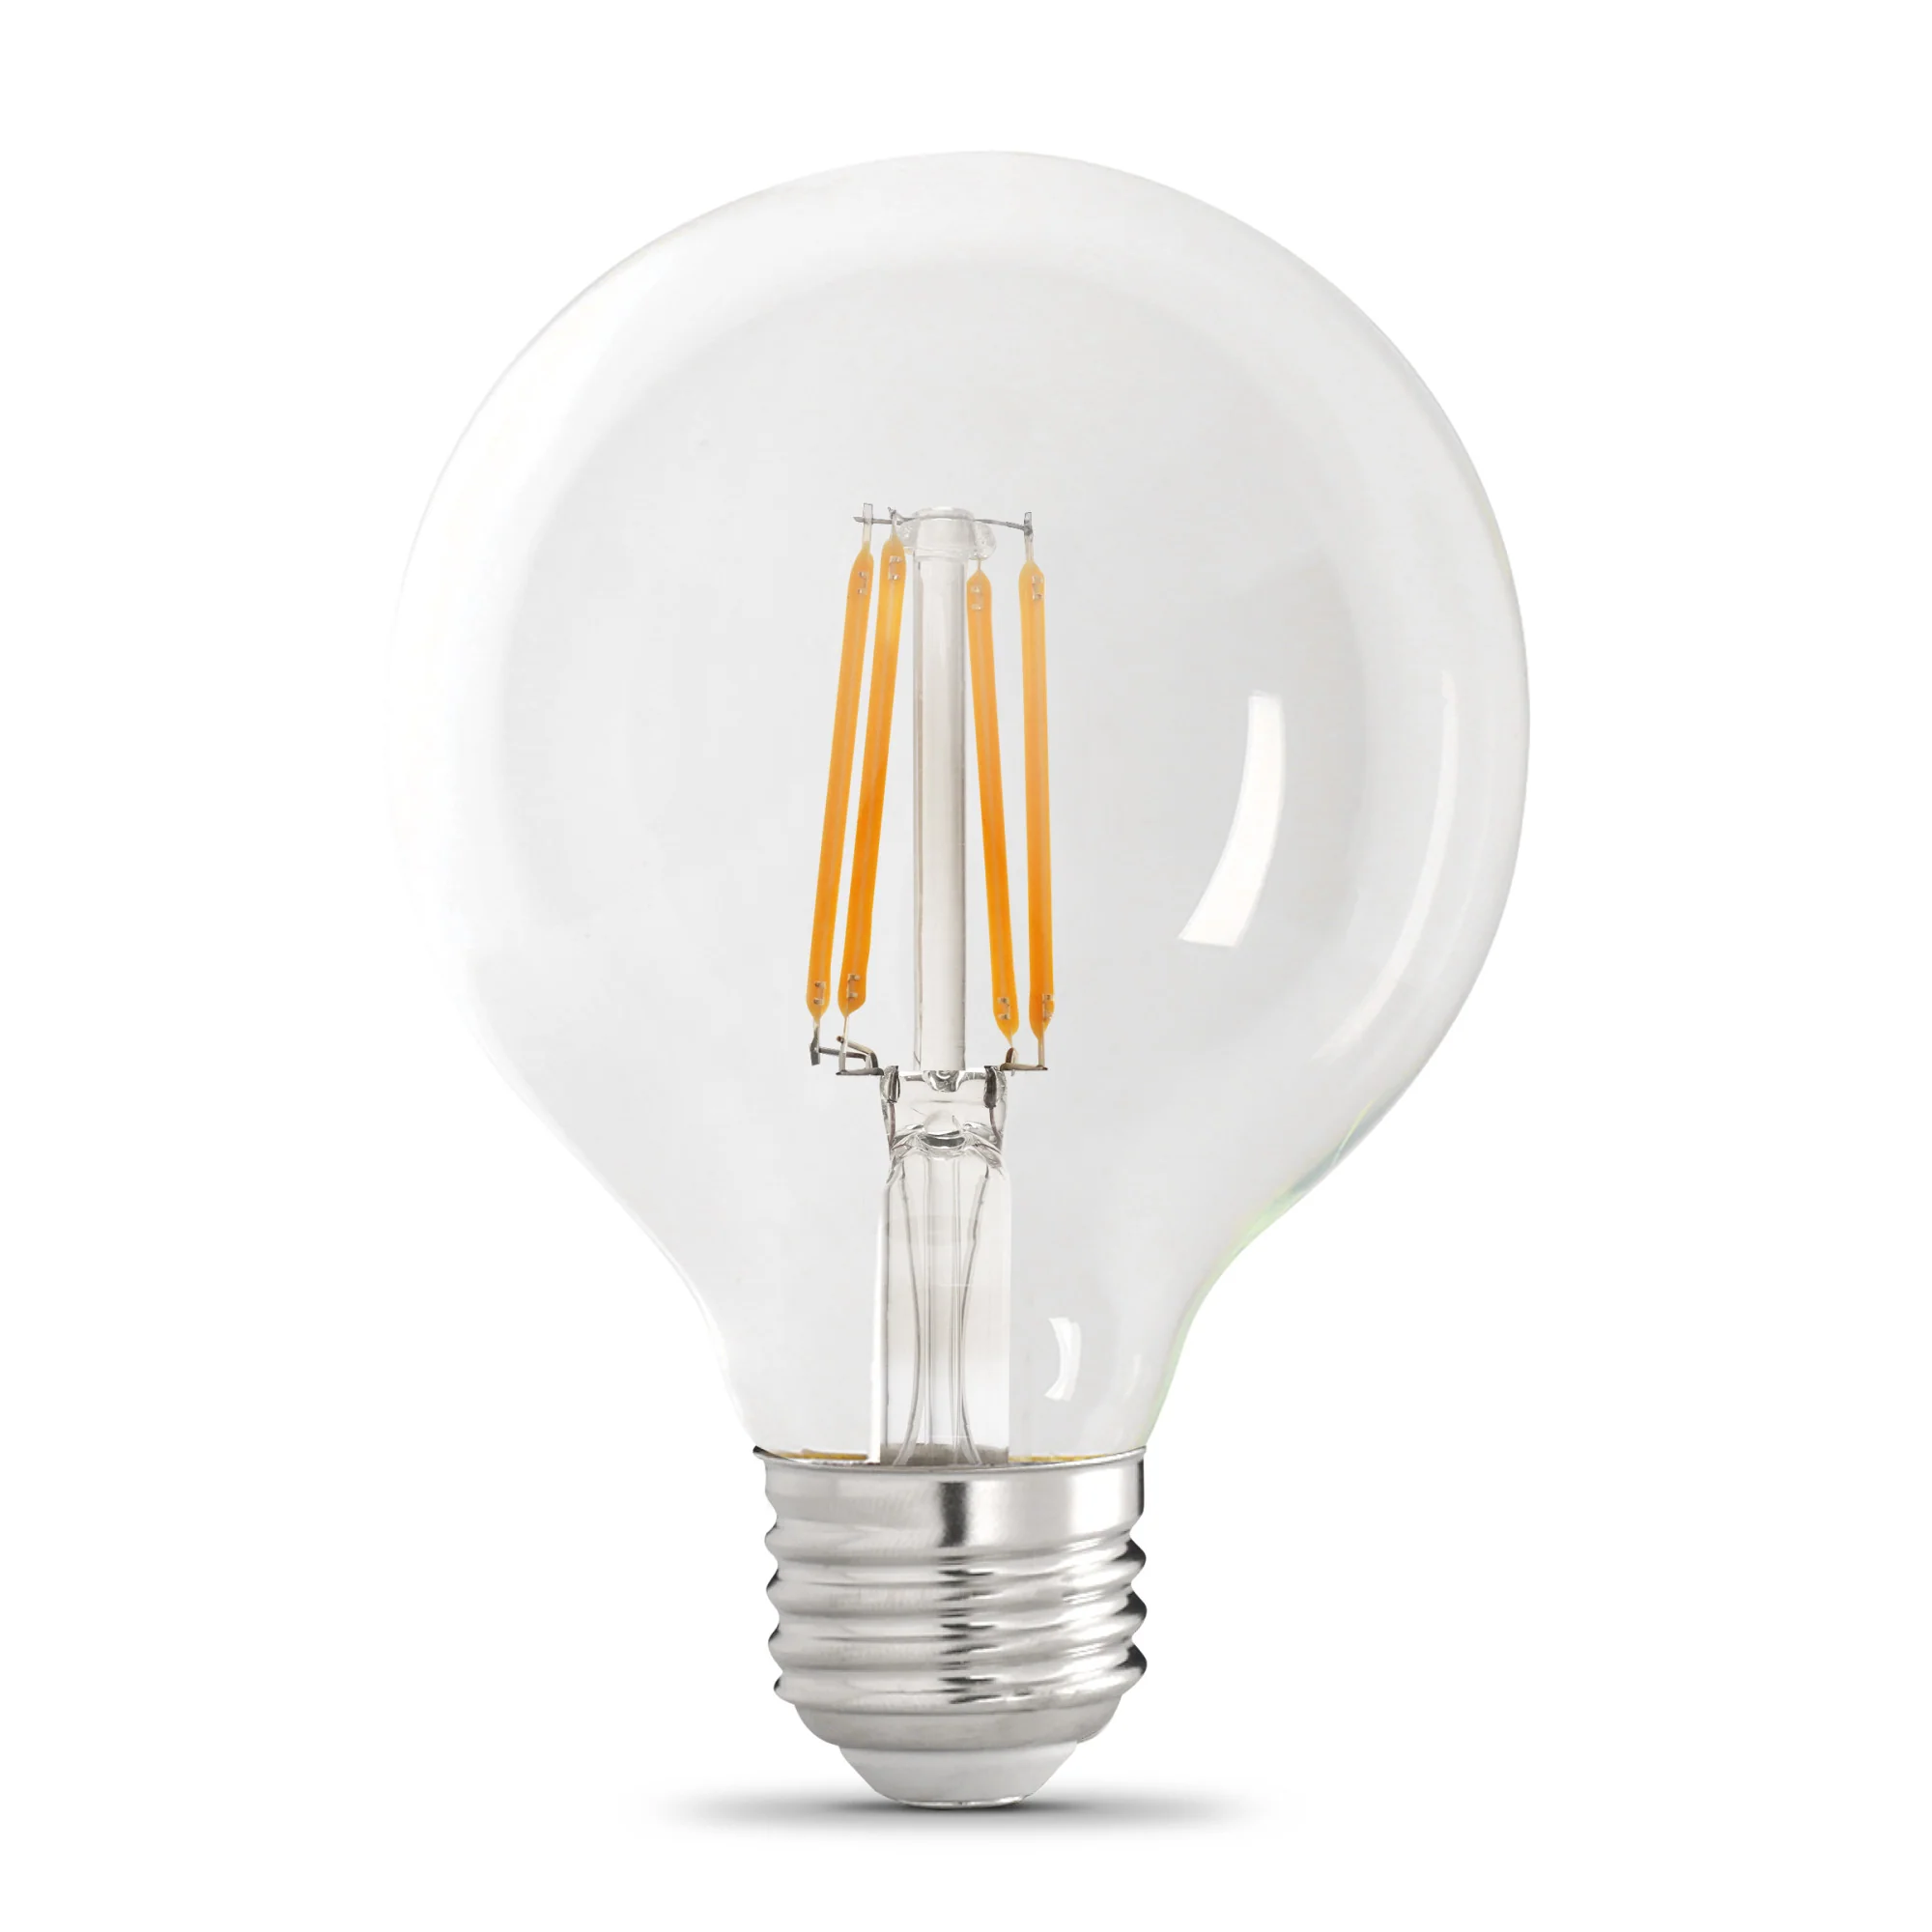 Edison-style LED light bulb